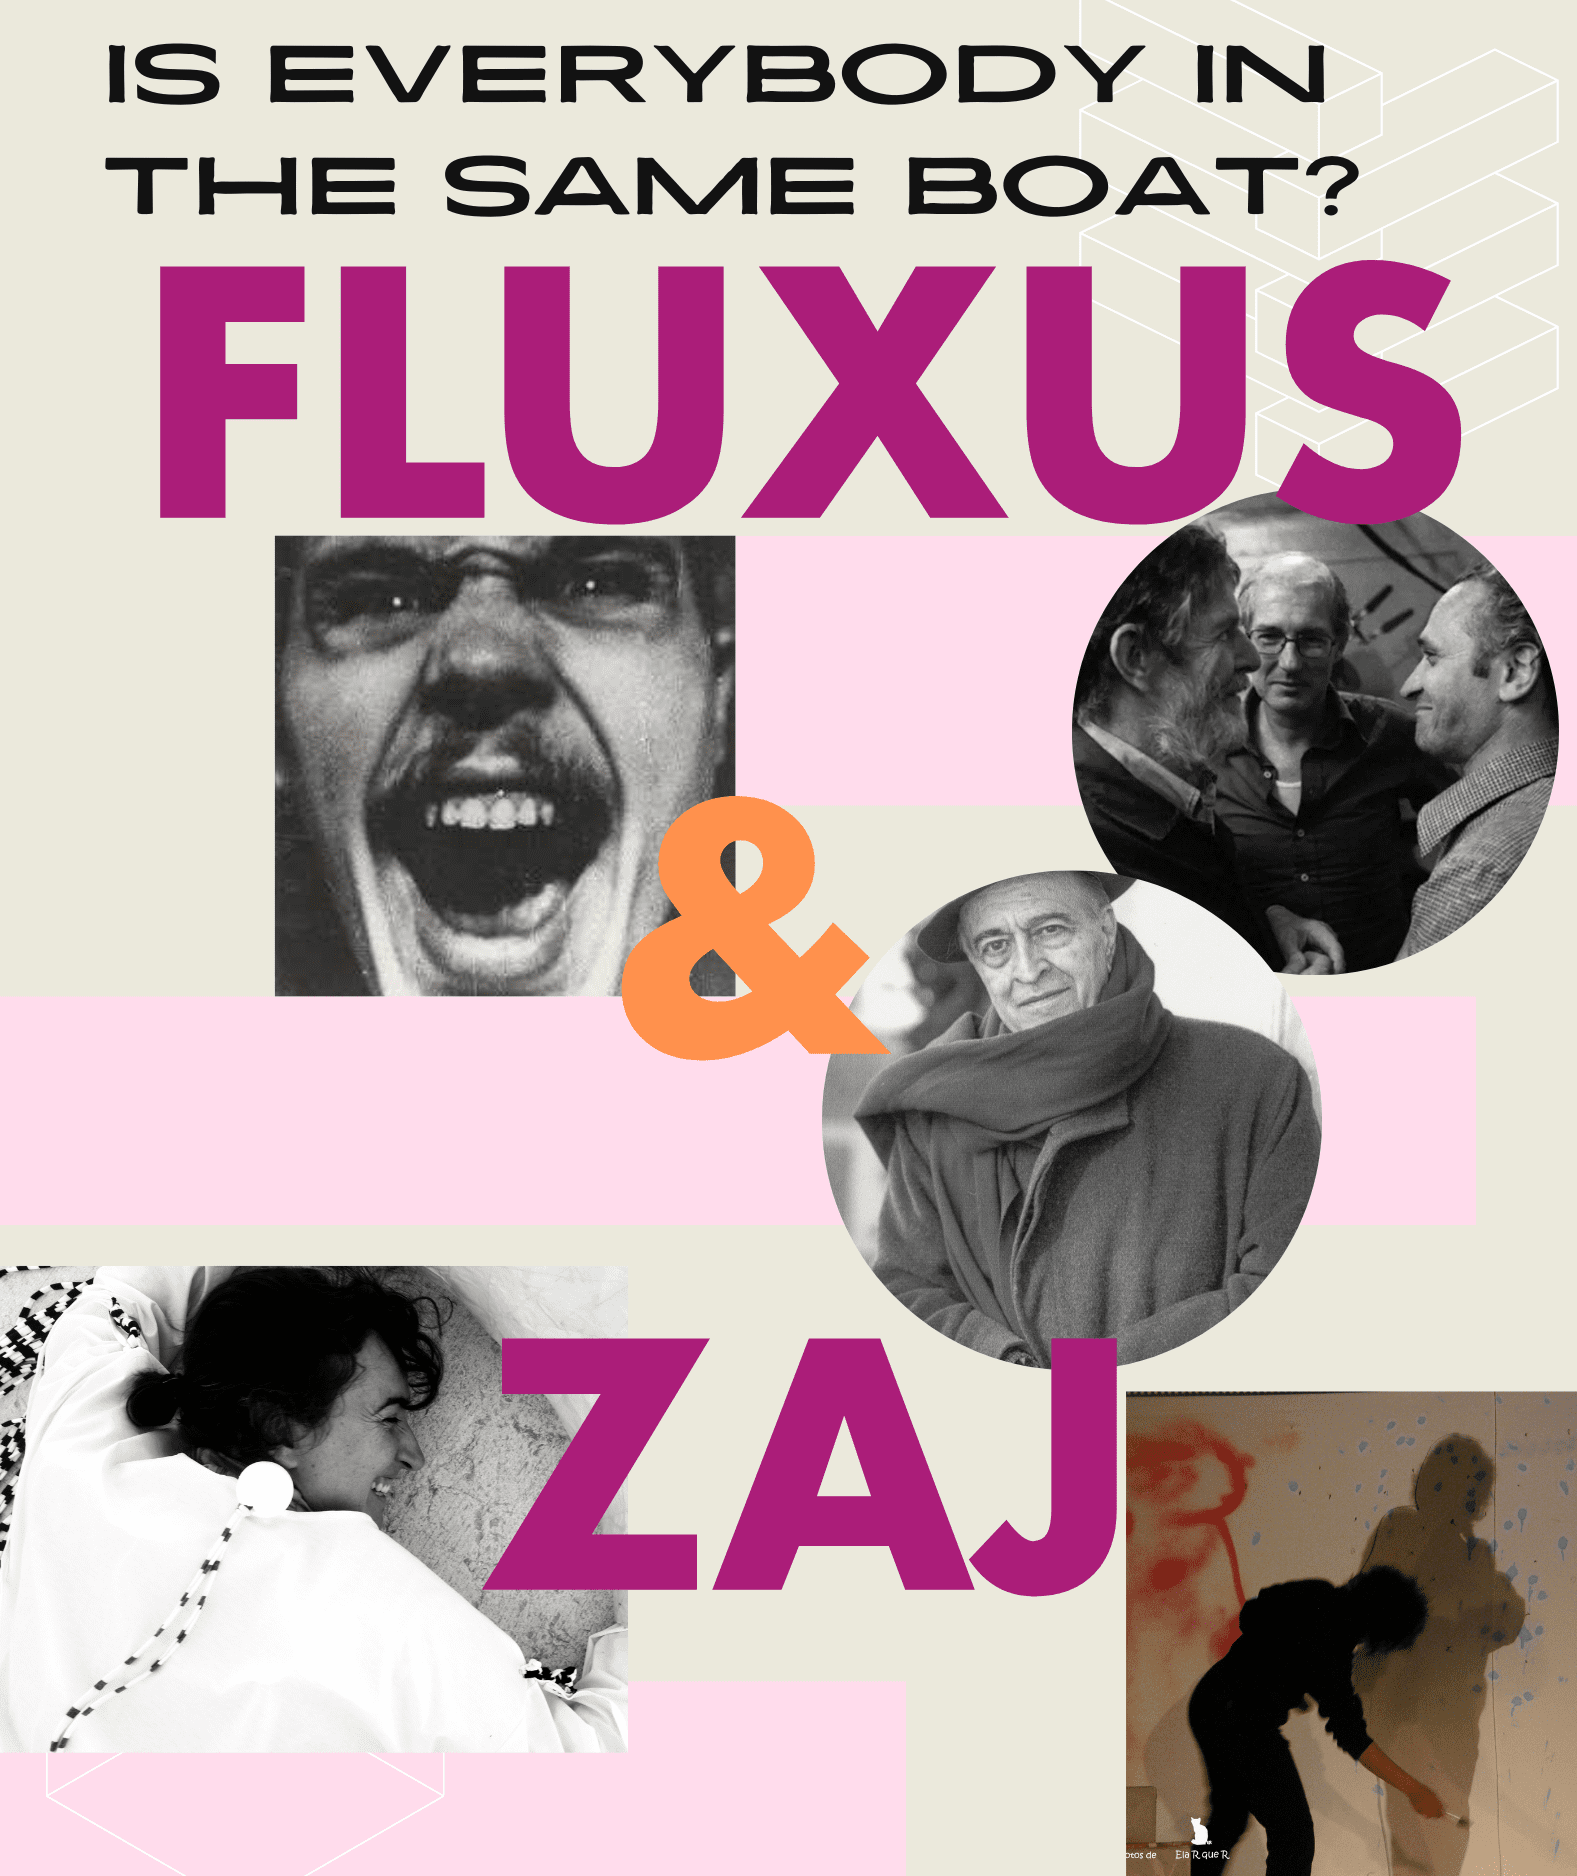 Fluxus Zaj